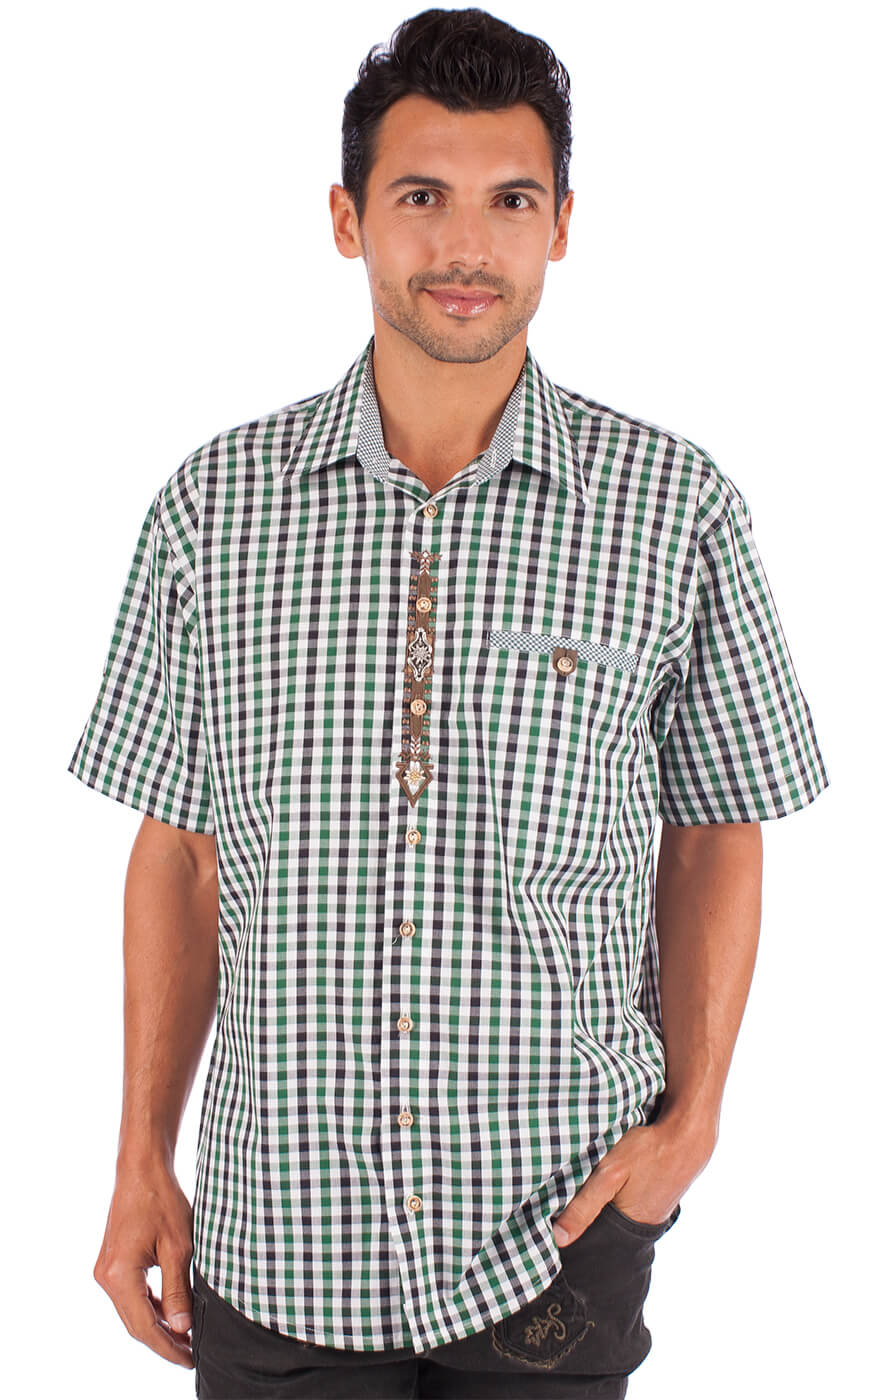 Tiroler overhemd 921001-2996-56 groen von OS-Trachten